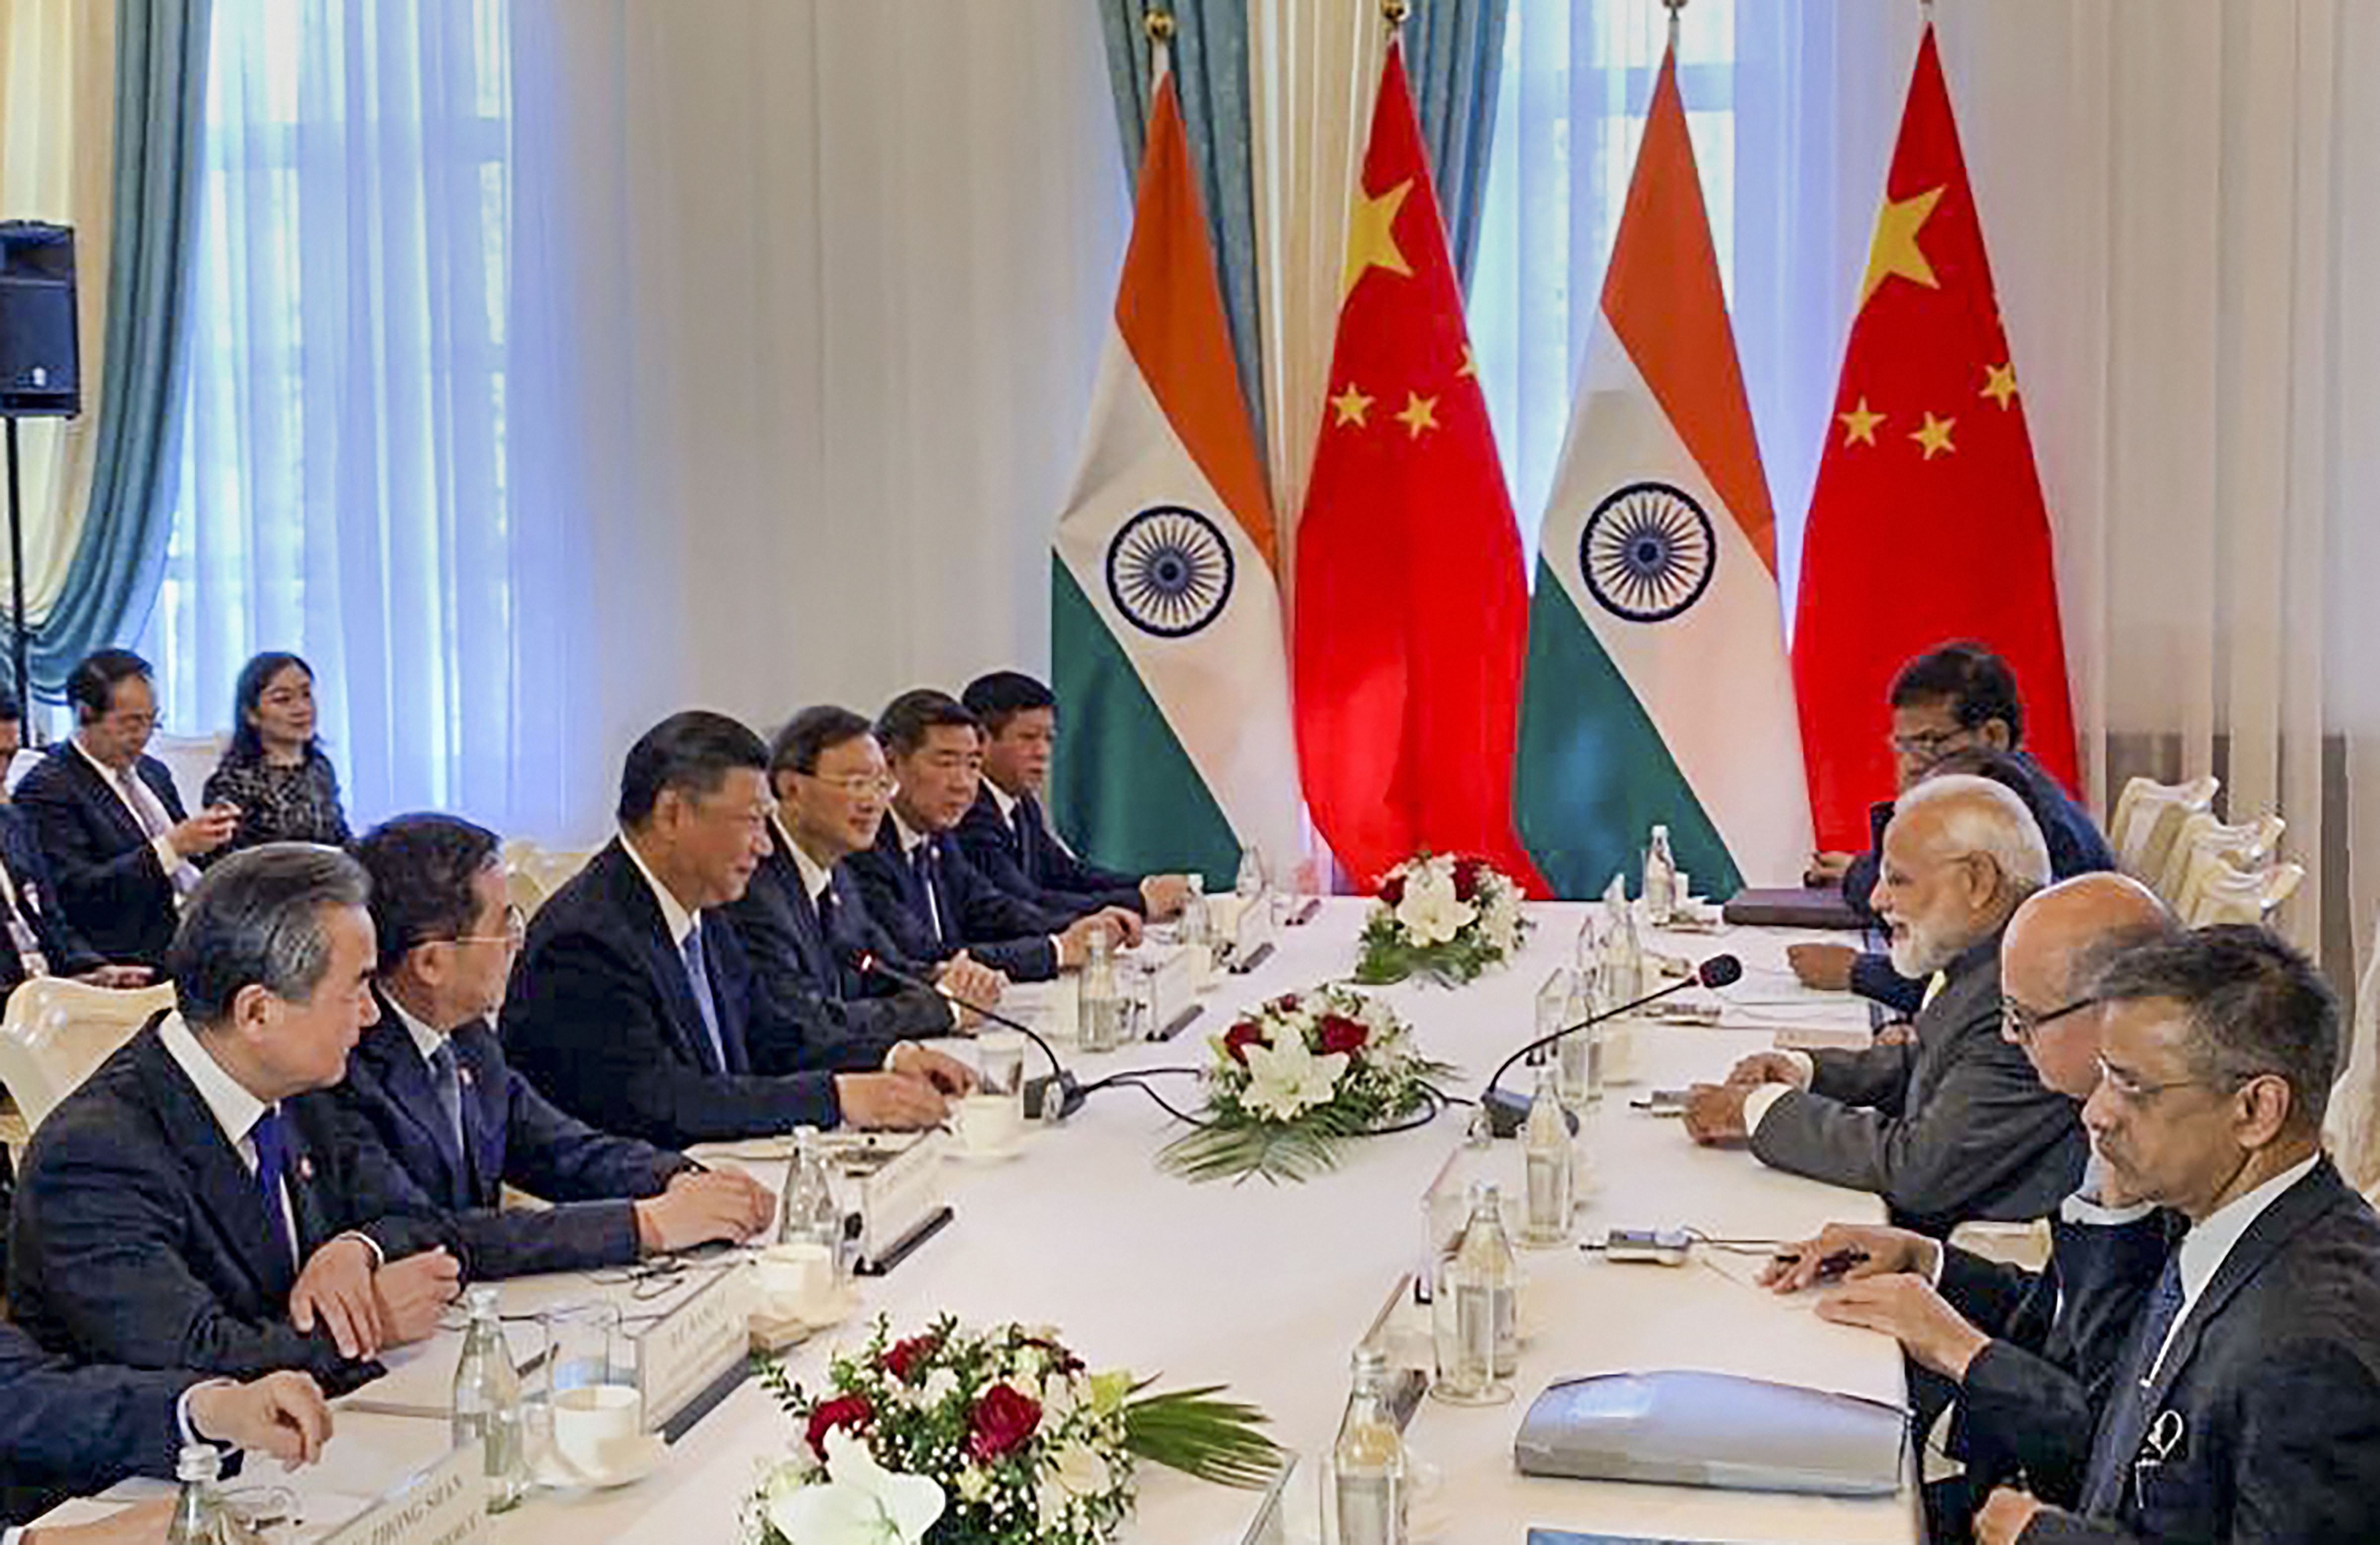 Nations funding terrorism must be held accountable: Modi at Bishkek summit